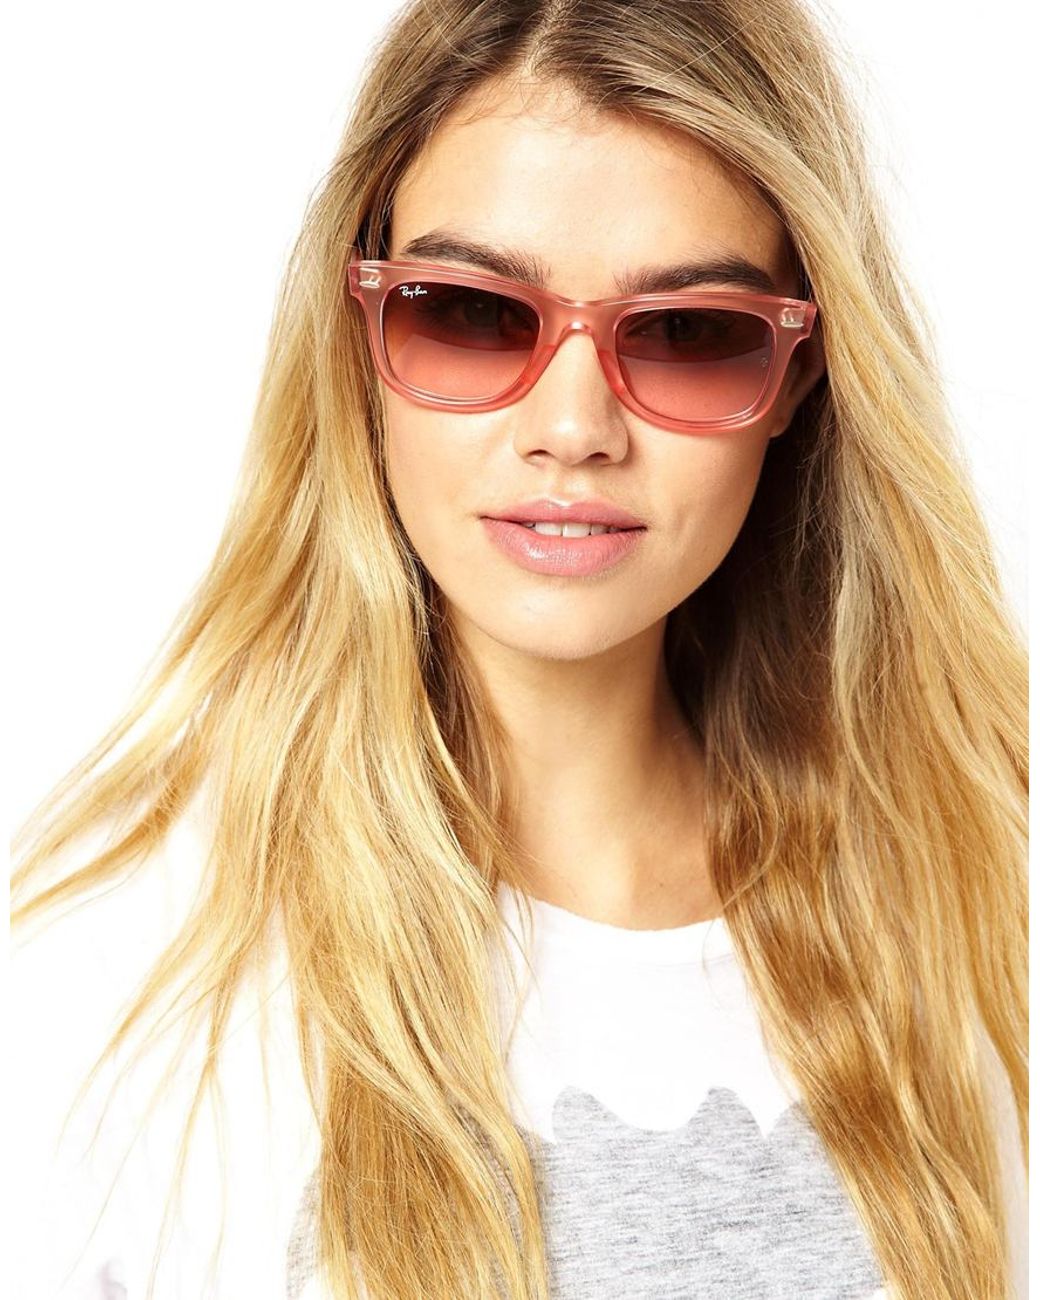 Ray-Ban Pink Wayfarer Sunglasses | Lyst